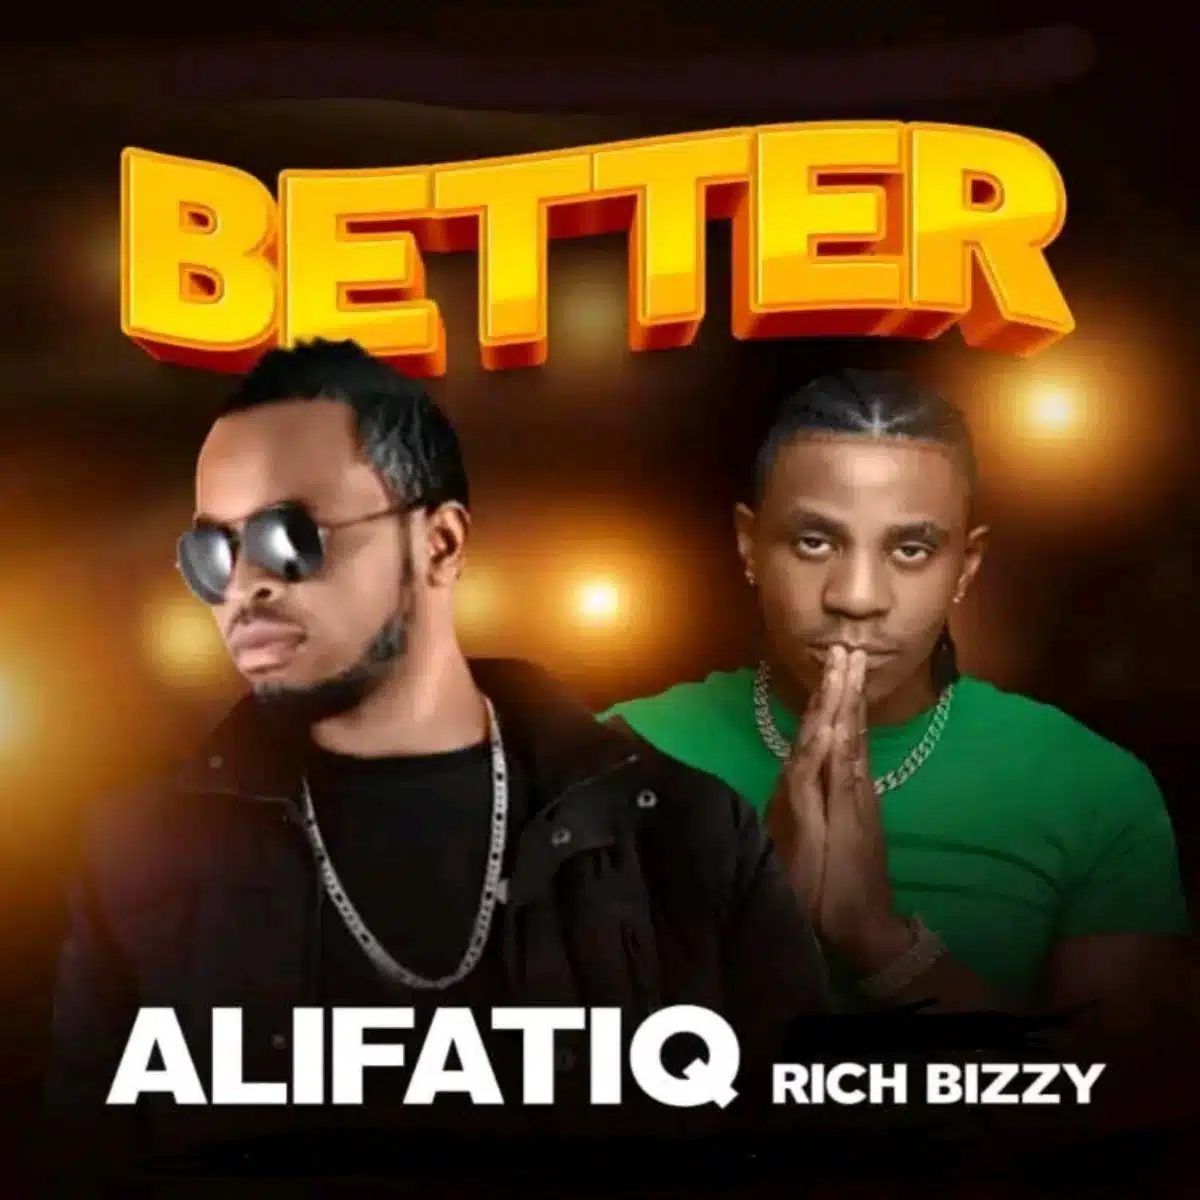 DOWNLOAD: AlifatiQ Ft Rich Bizzy – “Better” Mp3